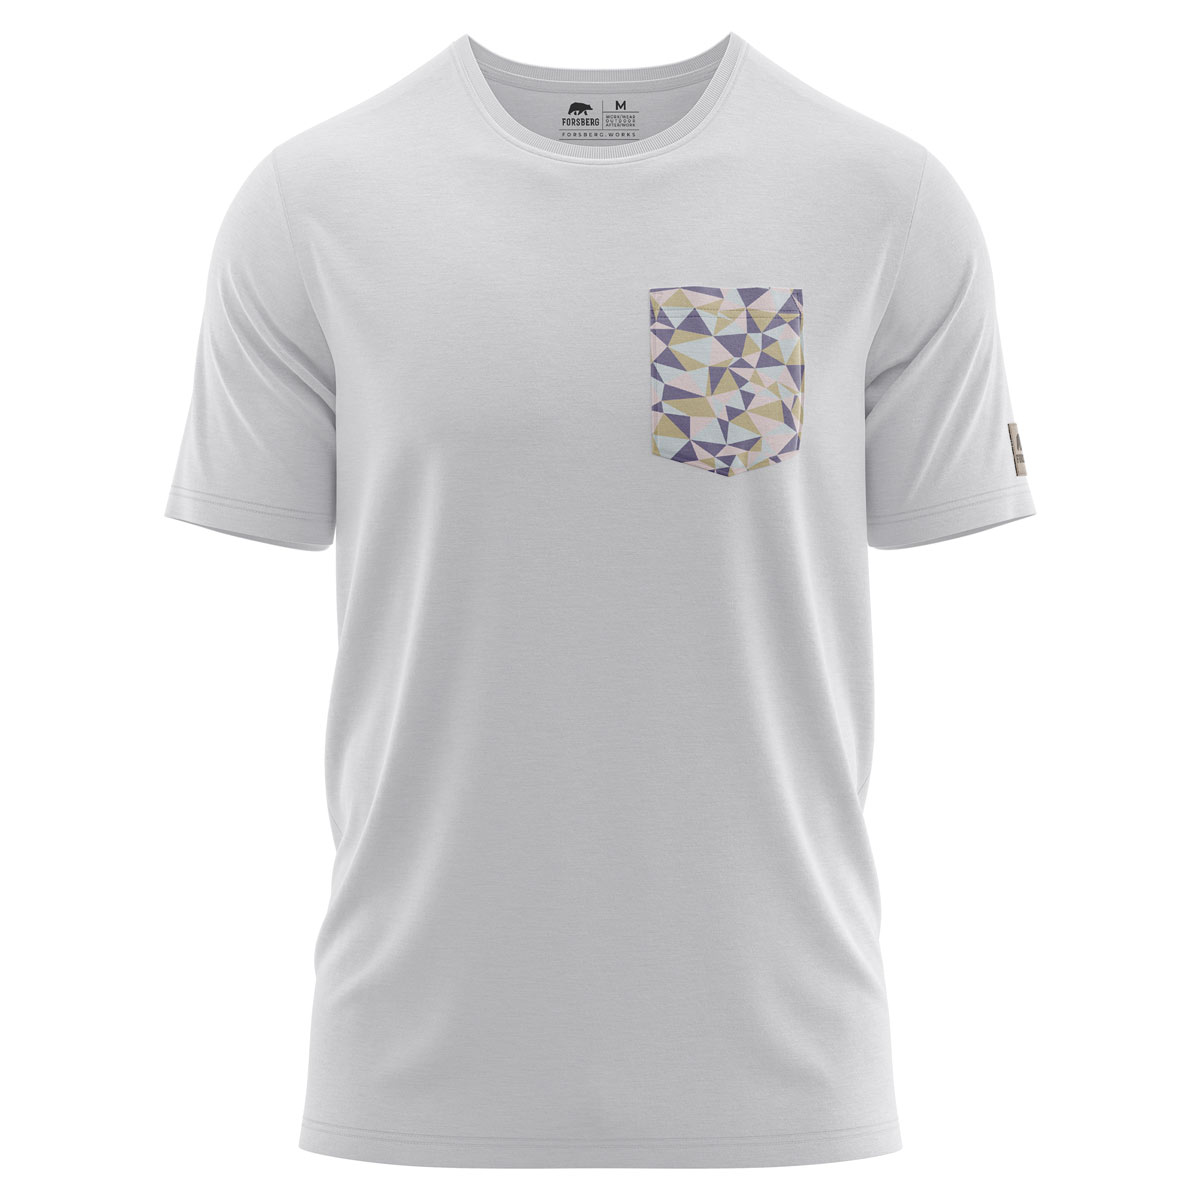 FORSBERG T-shirt met borstzak in veelhoekig dessin wit, petrol